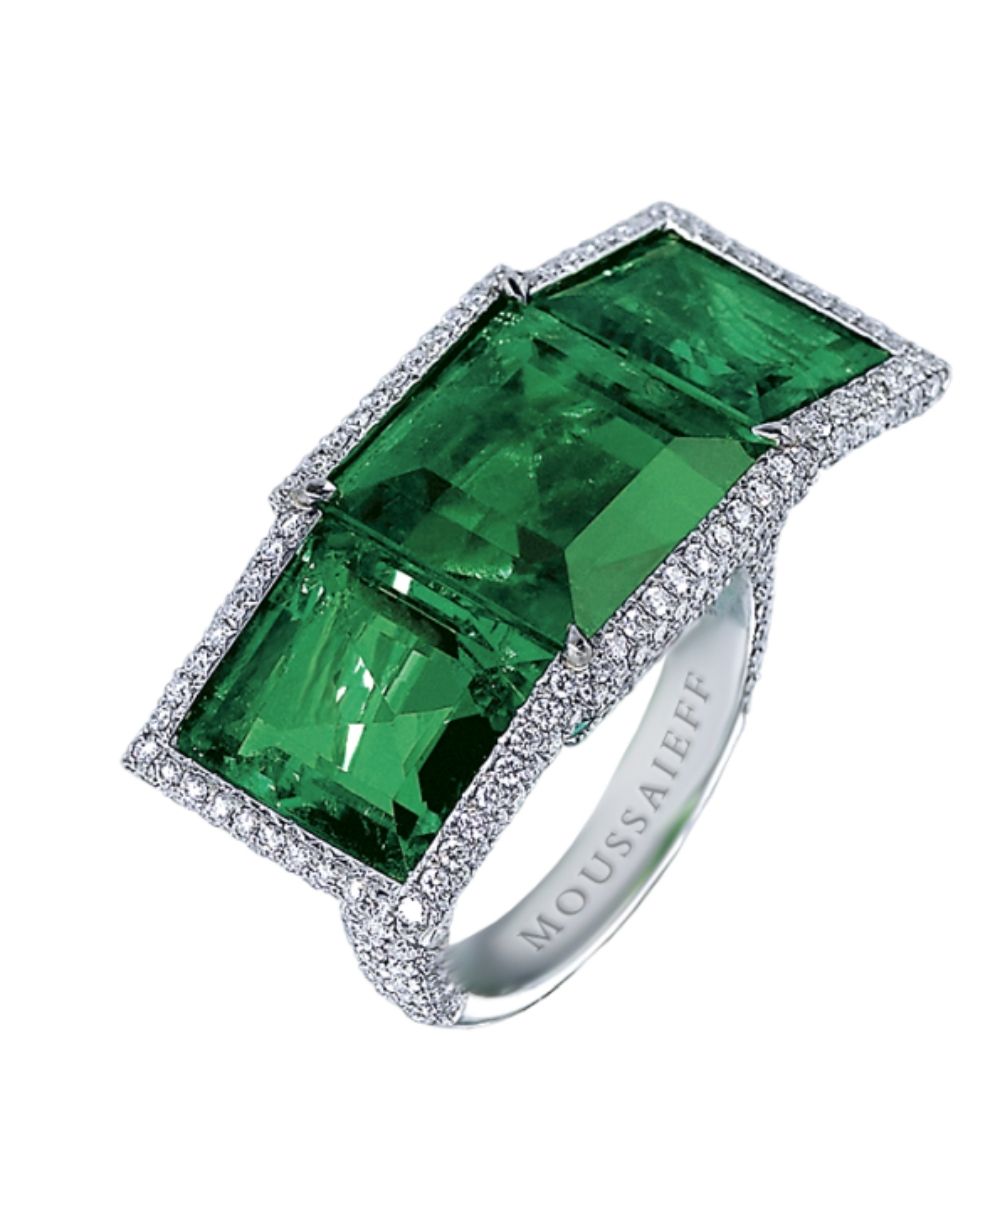 Fantastical Emerald High Jewellery: Birthstone of May